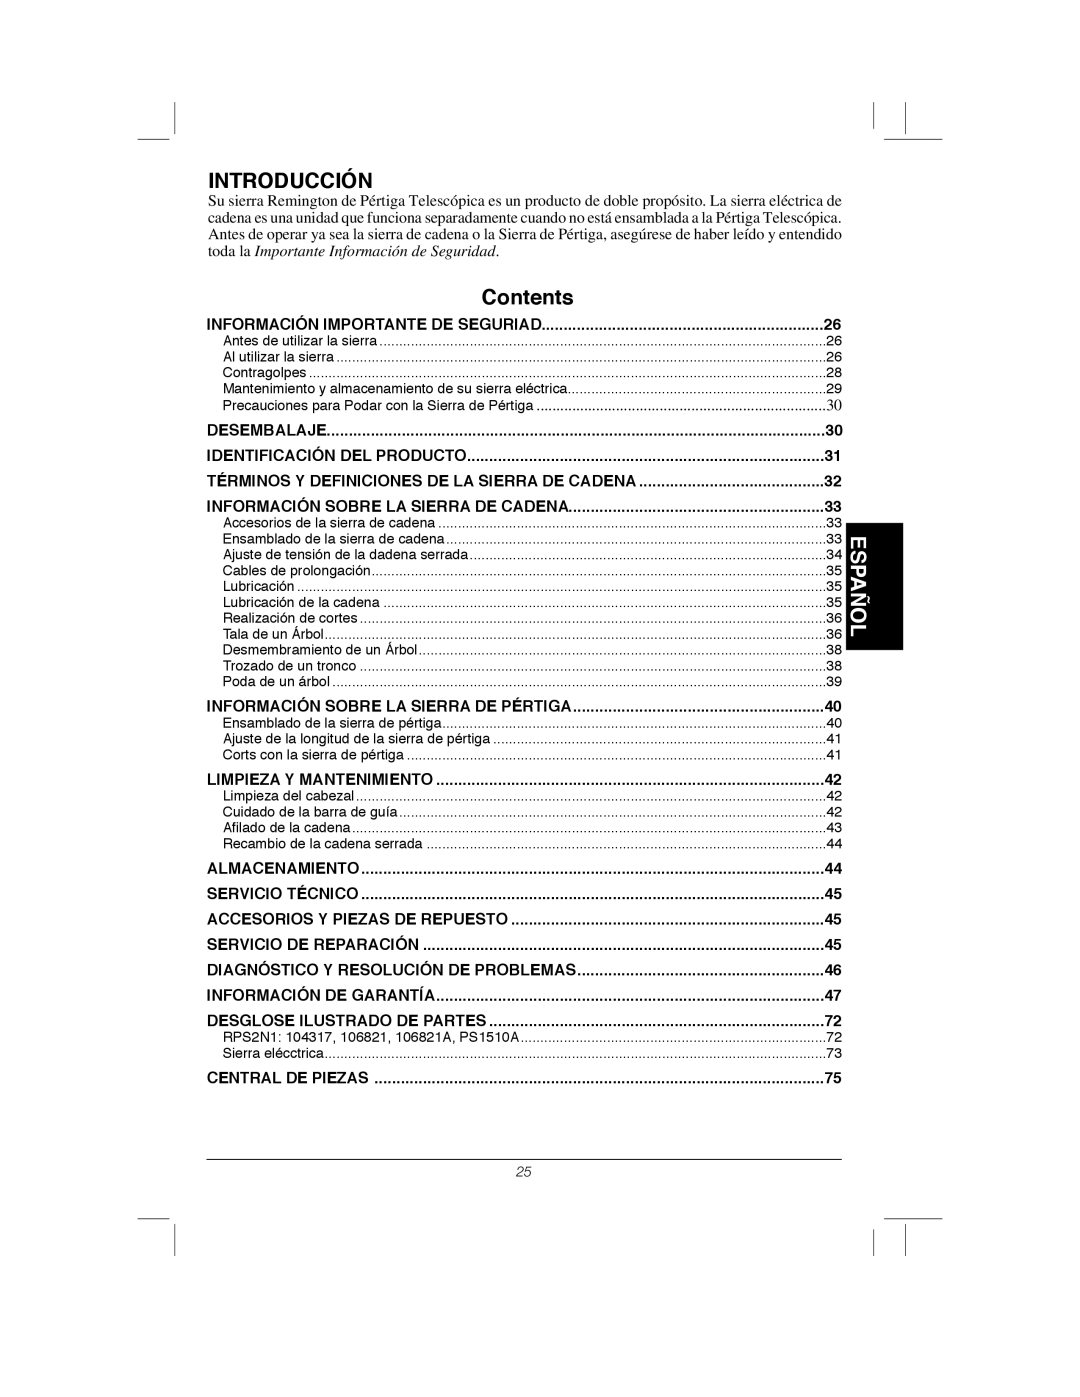 Remington Power Tools RPS2N1, 104317, PS1510A manual Introducción, Contents, Español 